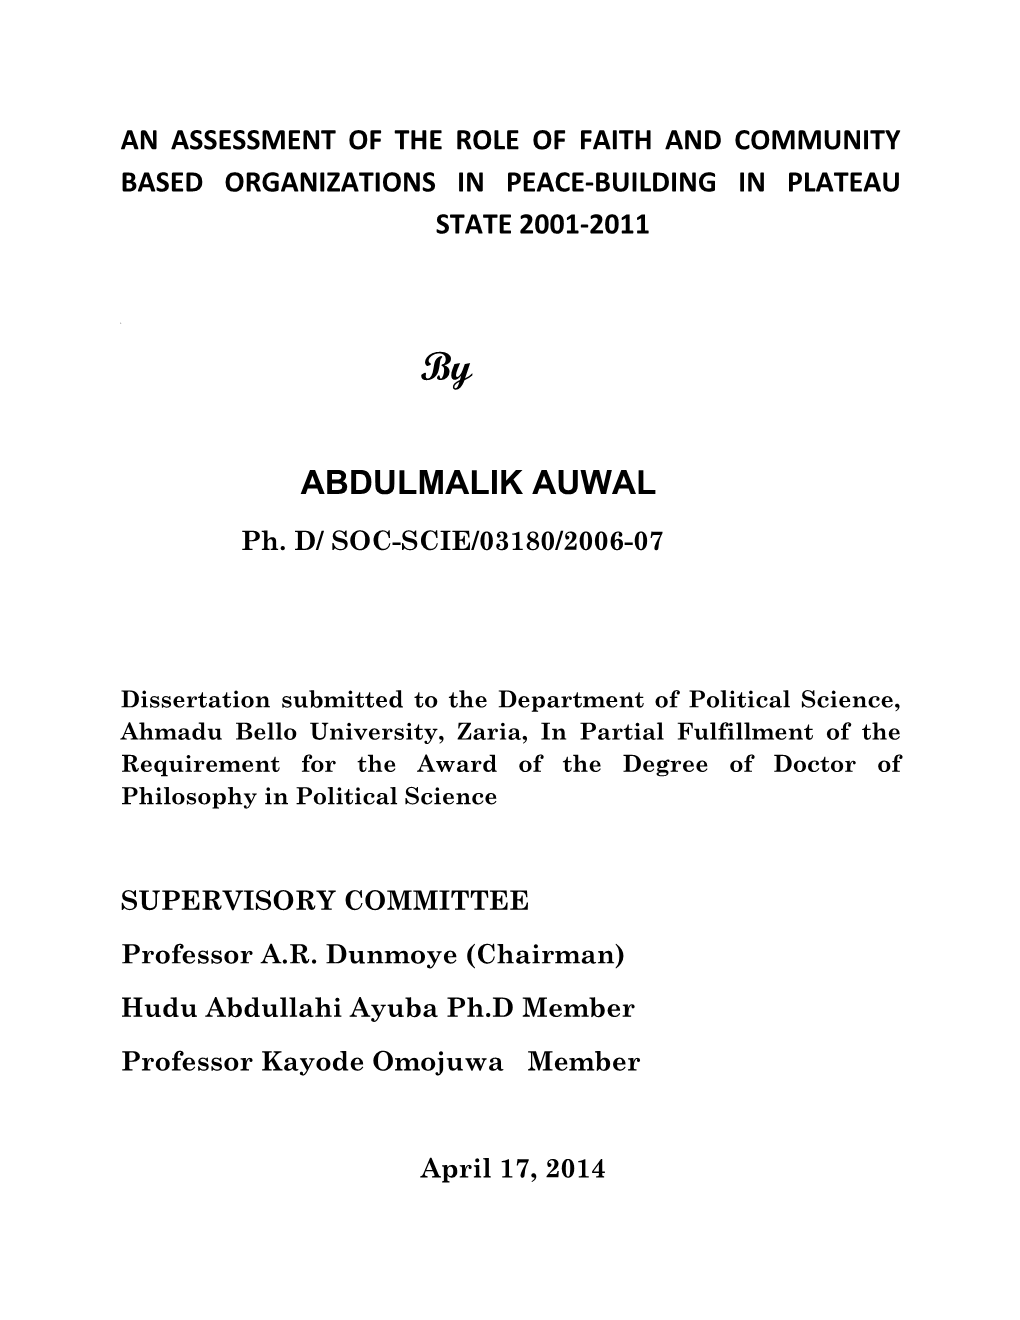 Abdulmalik Auwal